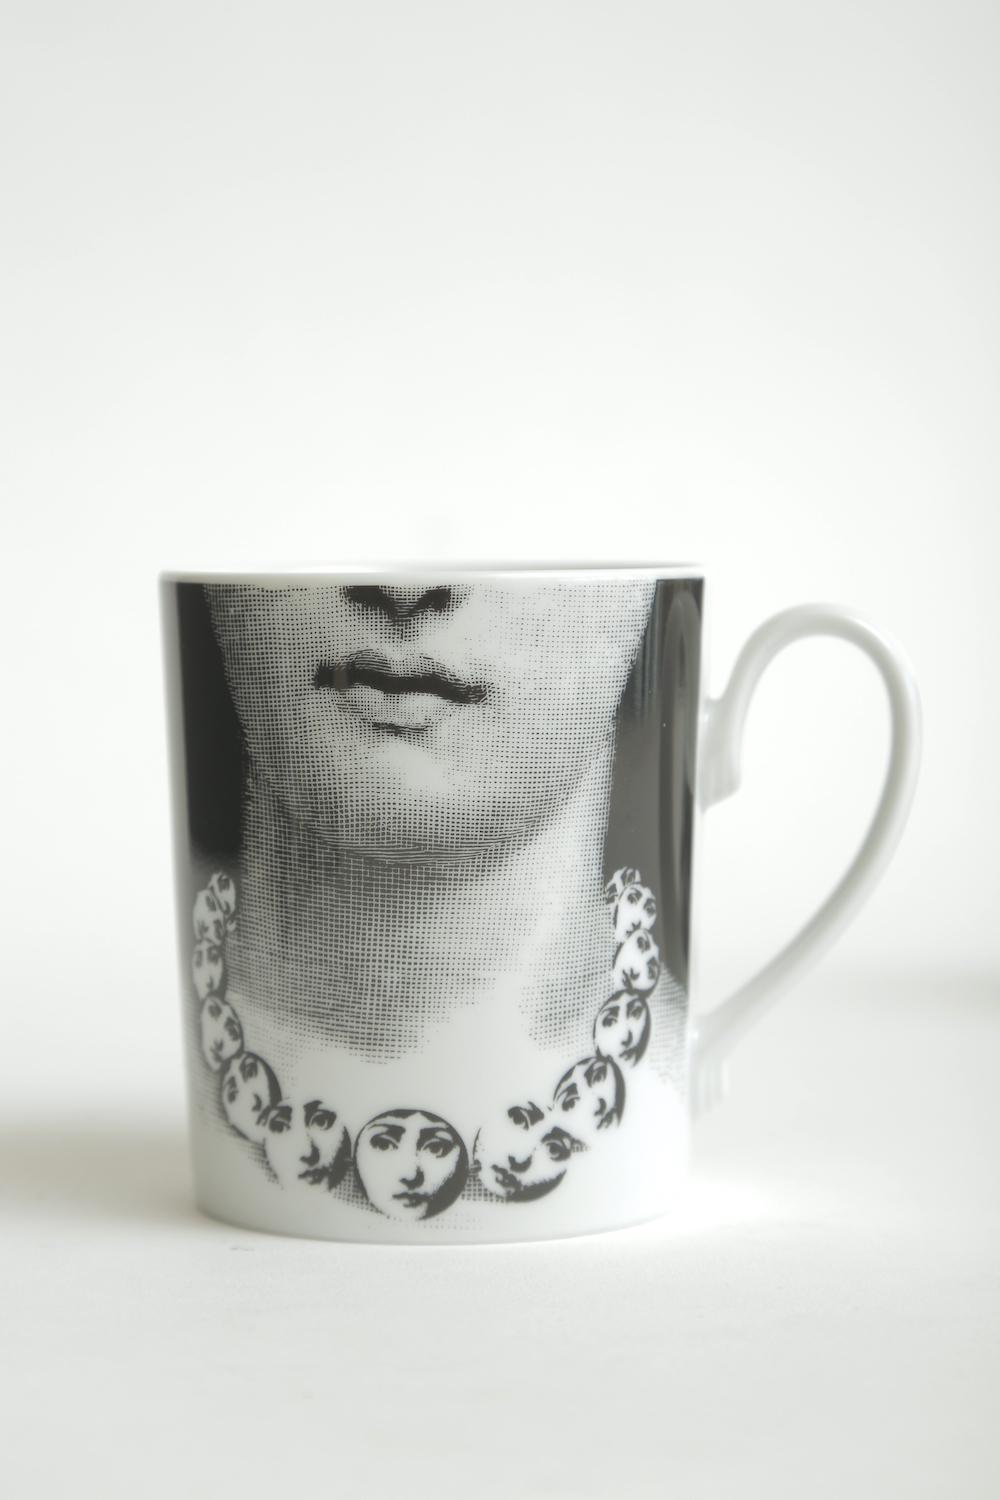 Piero Fornasetti for Rosenthal Lina Porcelain Coffee or Tea Mugs Vintage Set /4 3